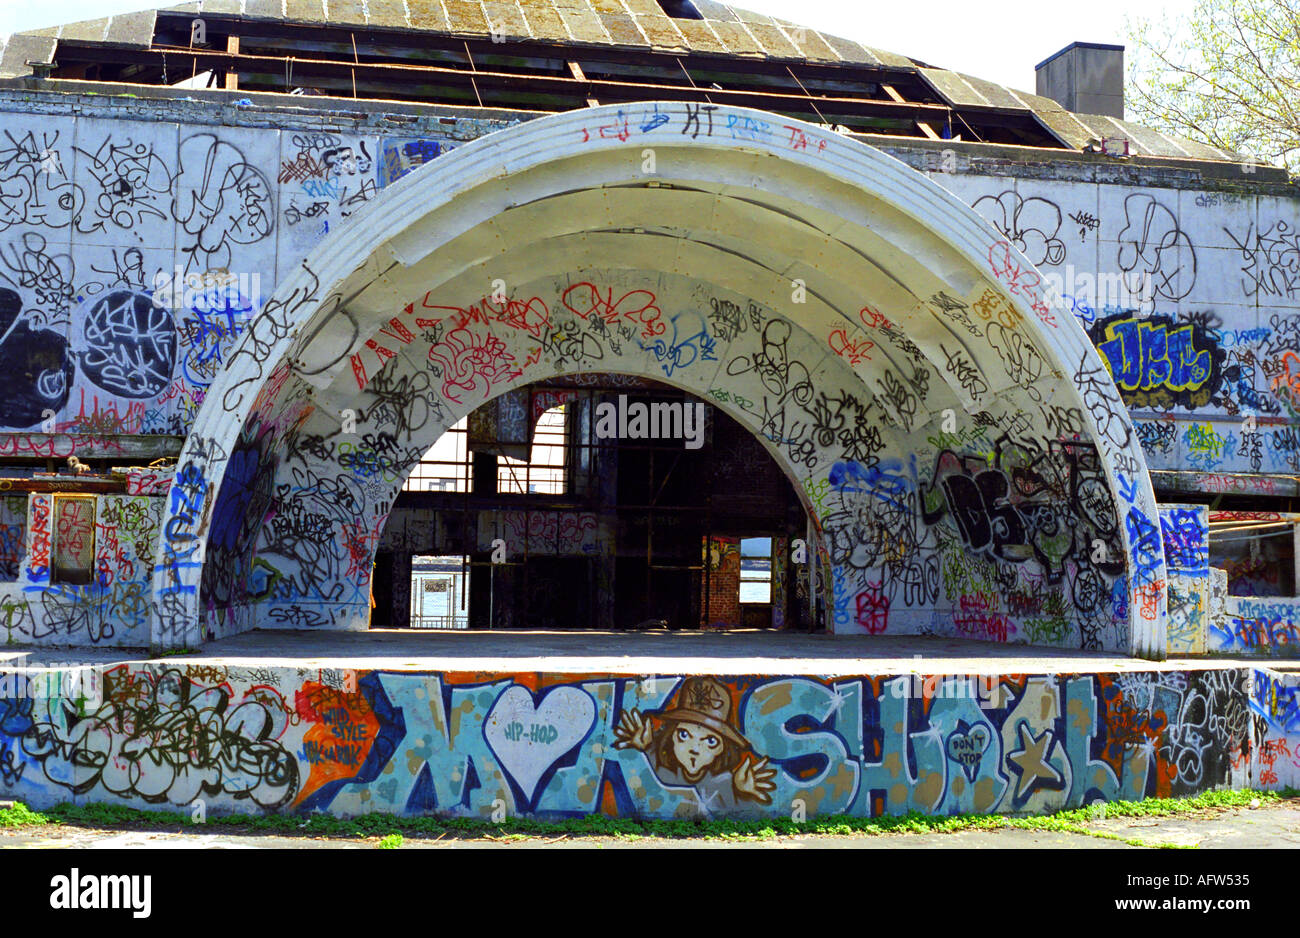 Graffiti on a derelict building in New York Stock Photo